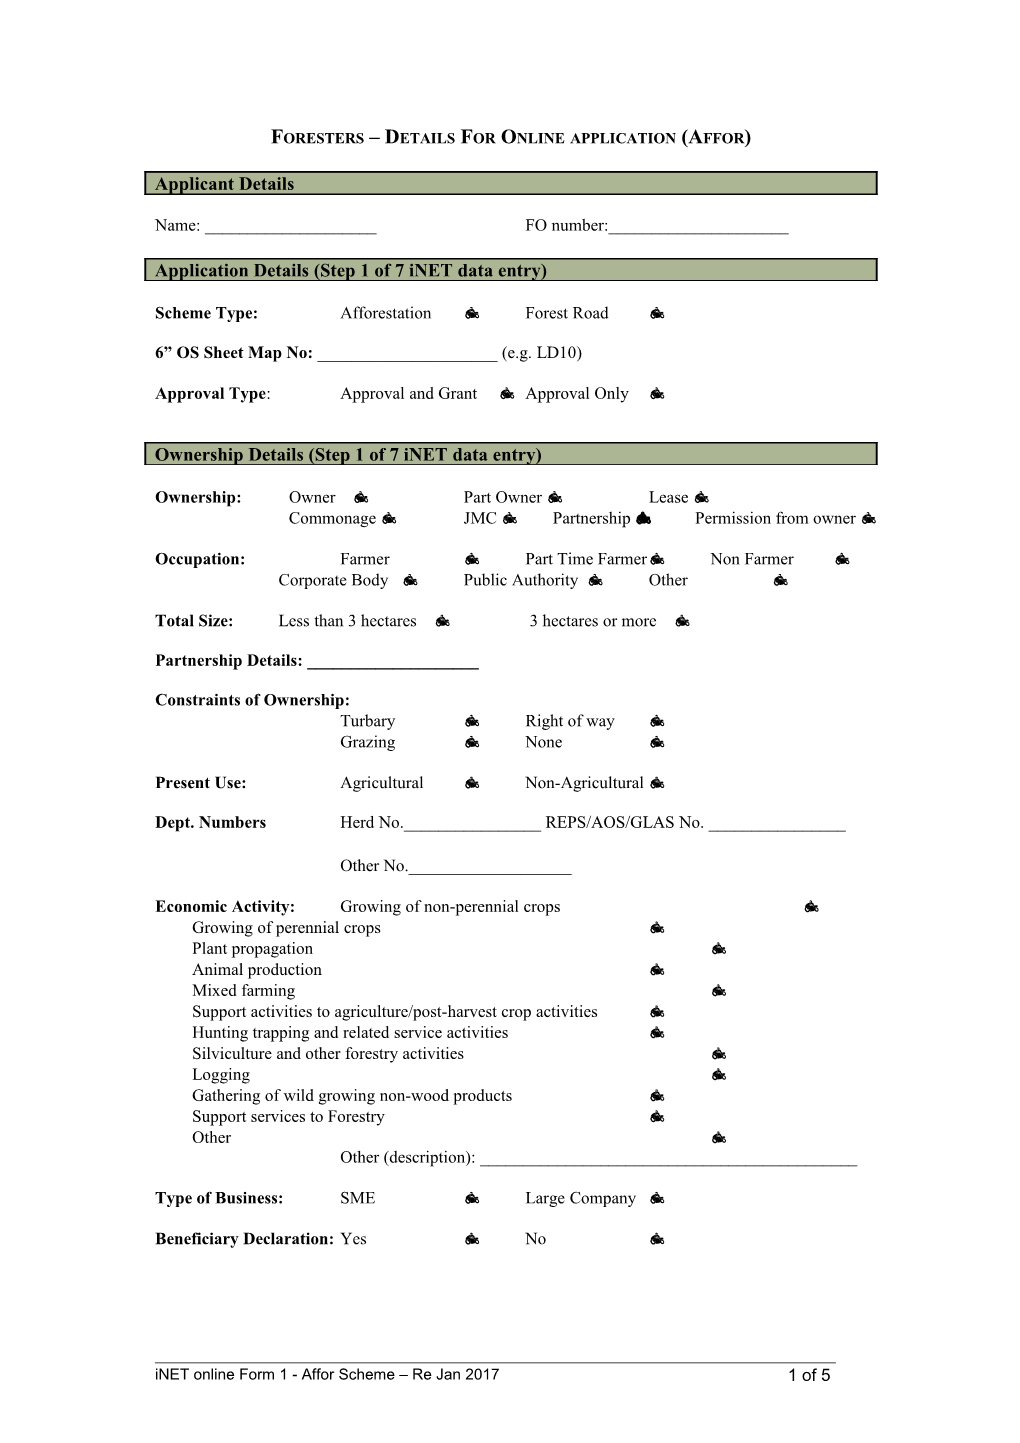 Foresters Details of Online Application Form (Affor)